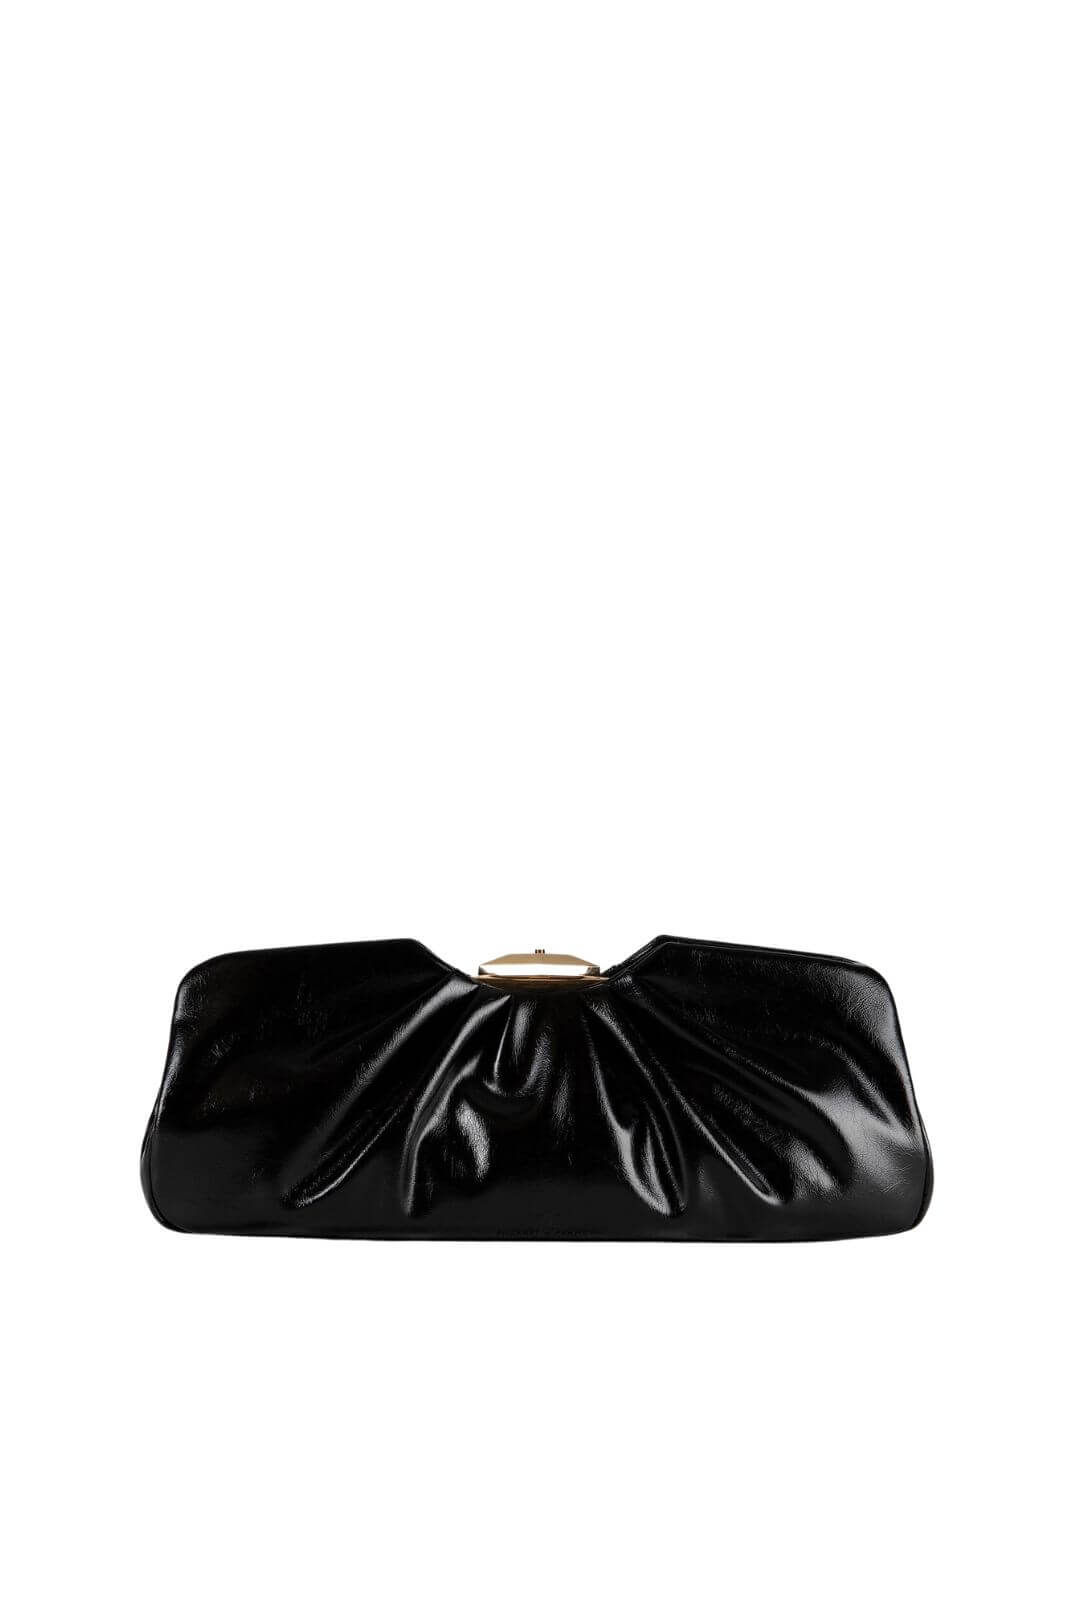 Elisabetta Franchi women's puffy clutch bag with logoed knob